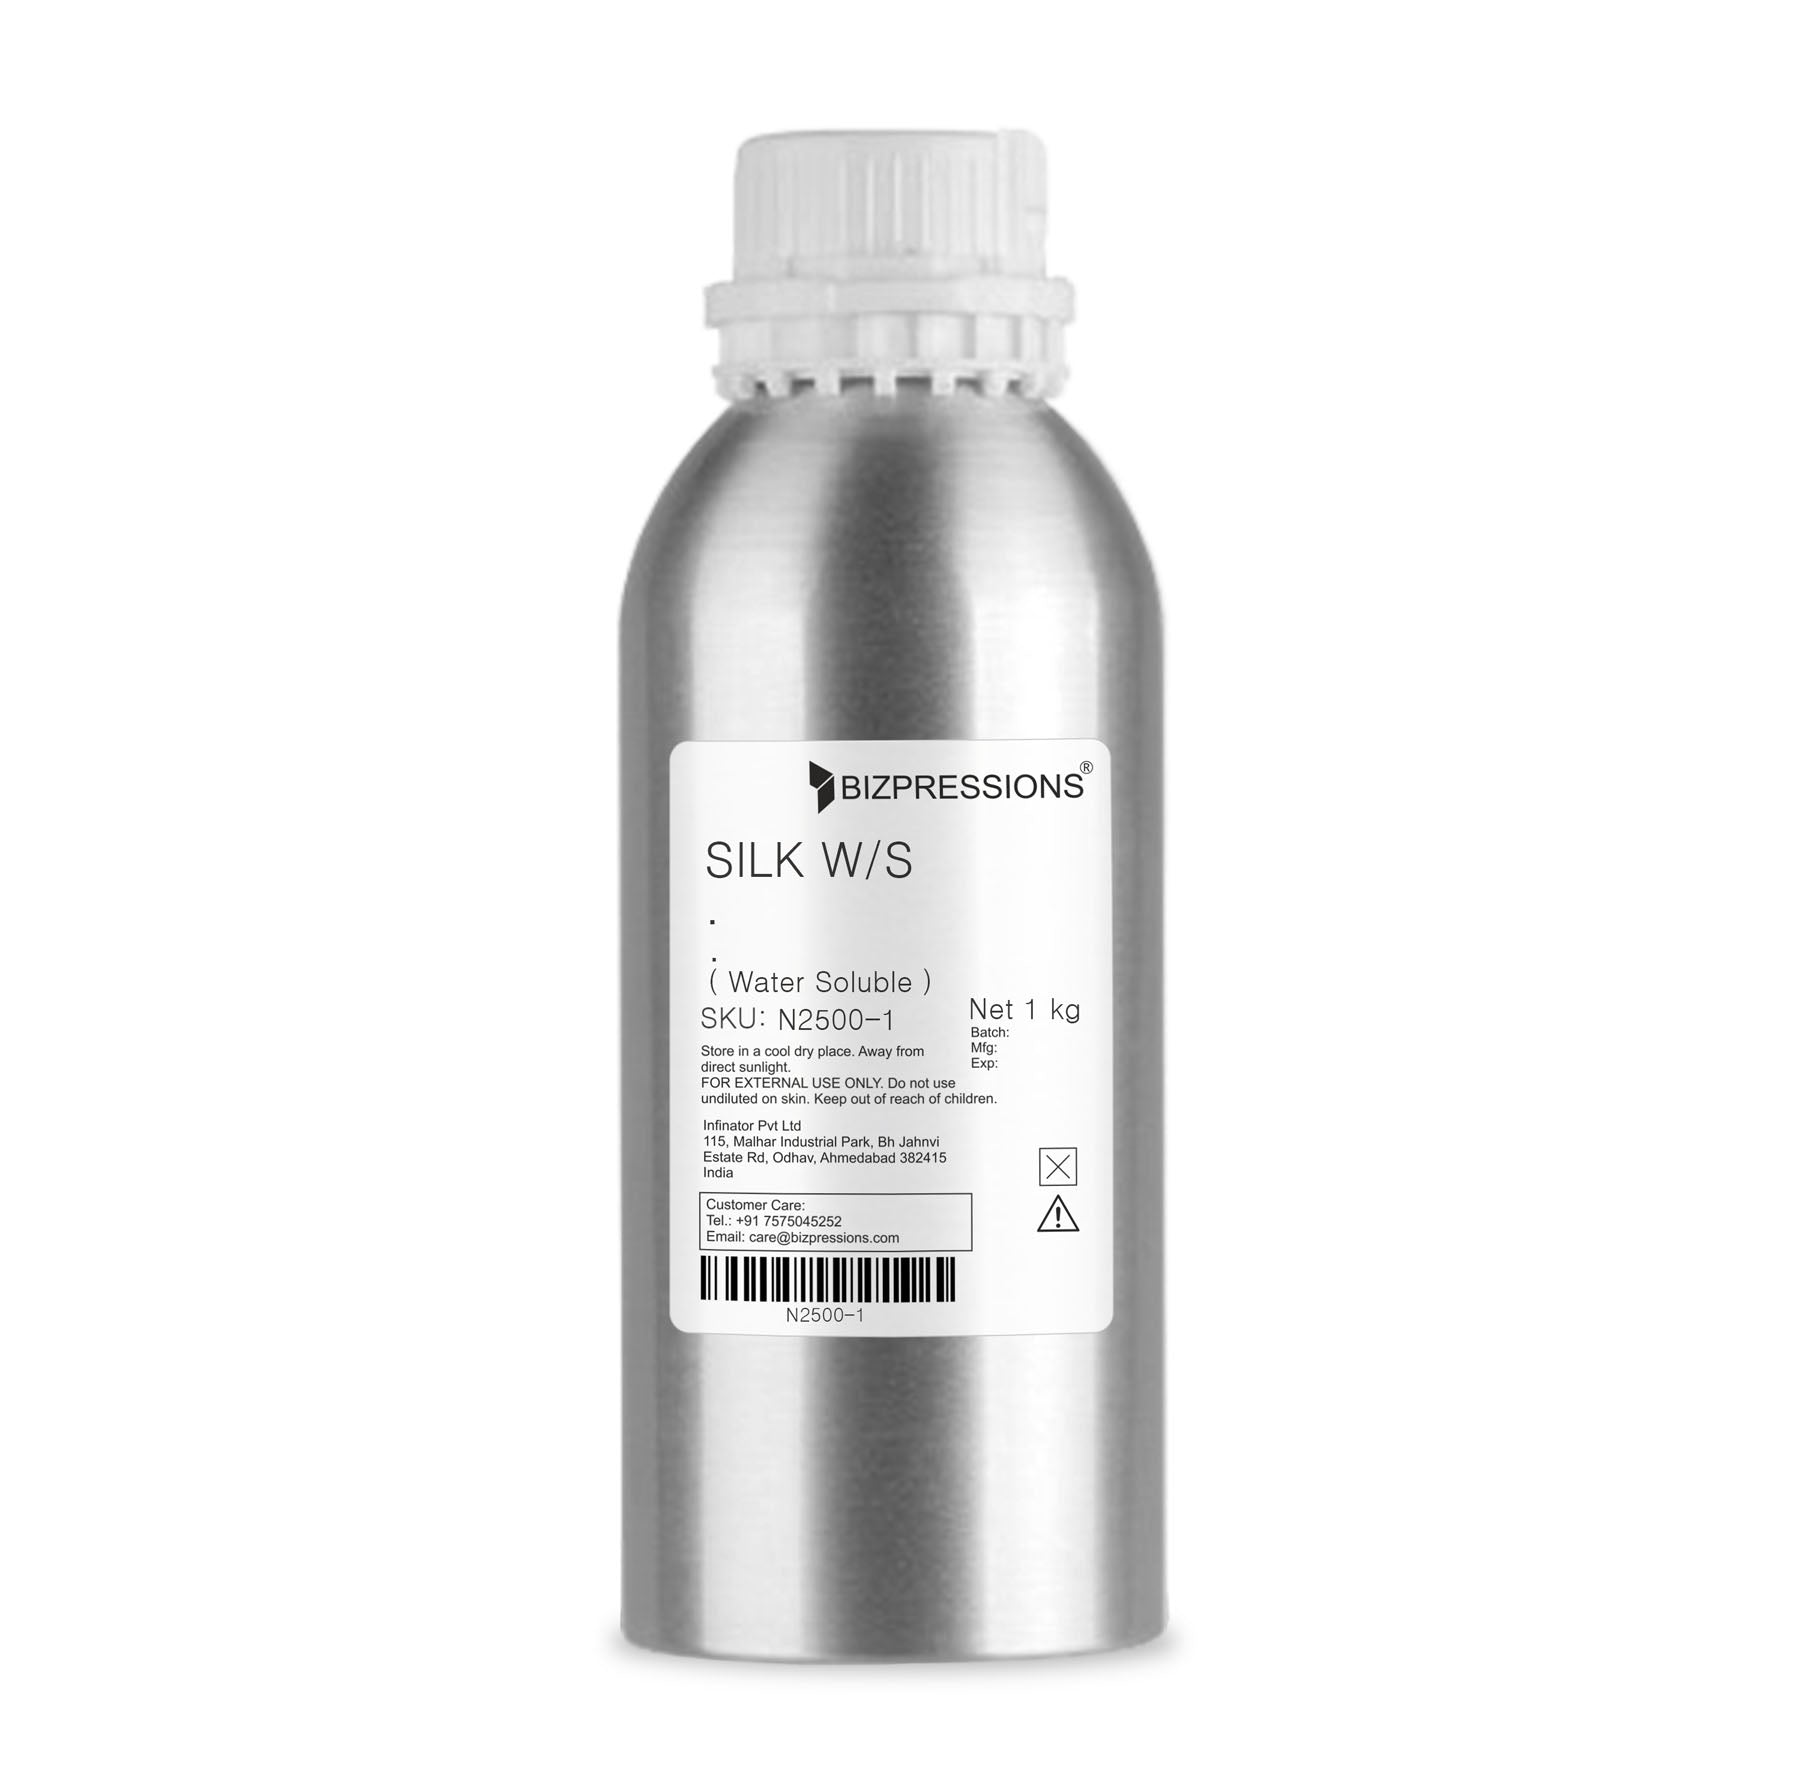 SILK W/S - Fragrance ( Water Soluble ) - 1 kg